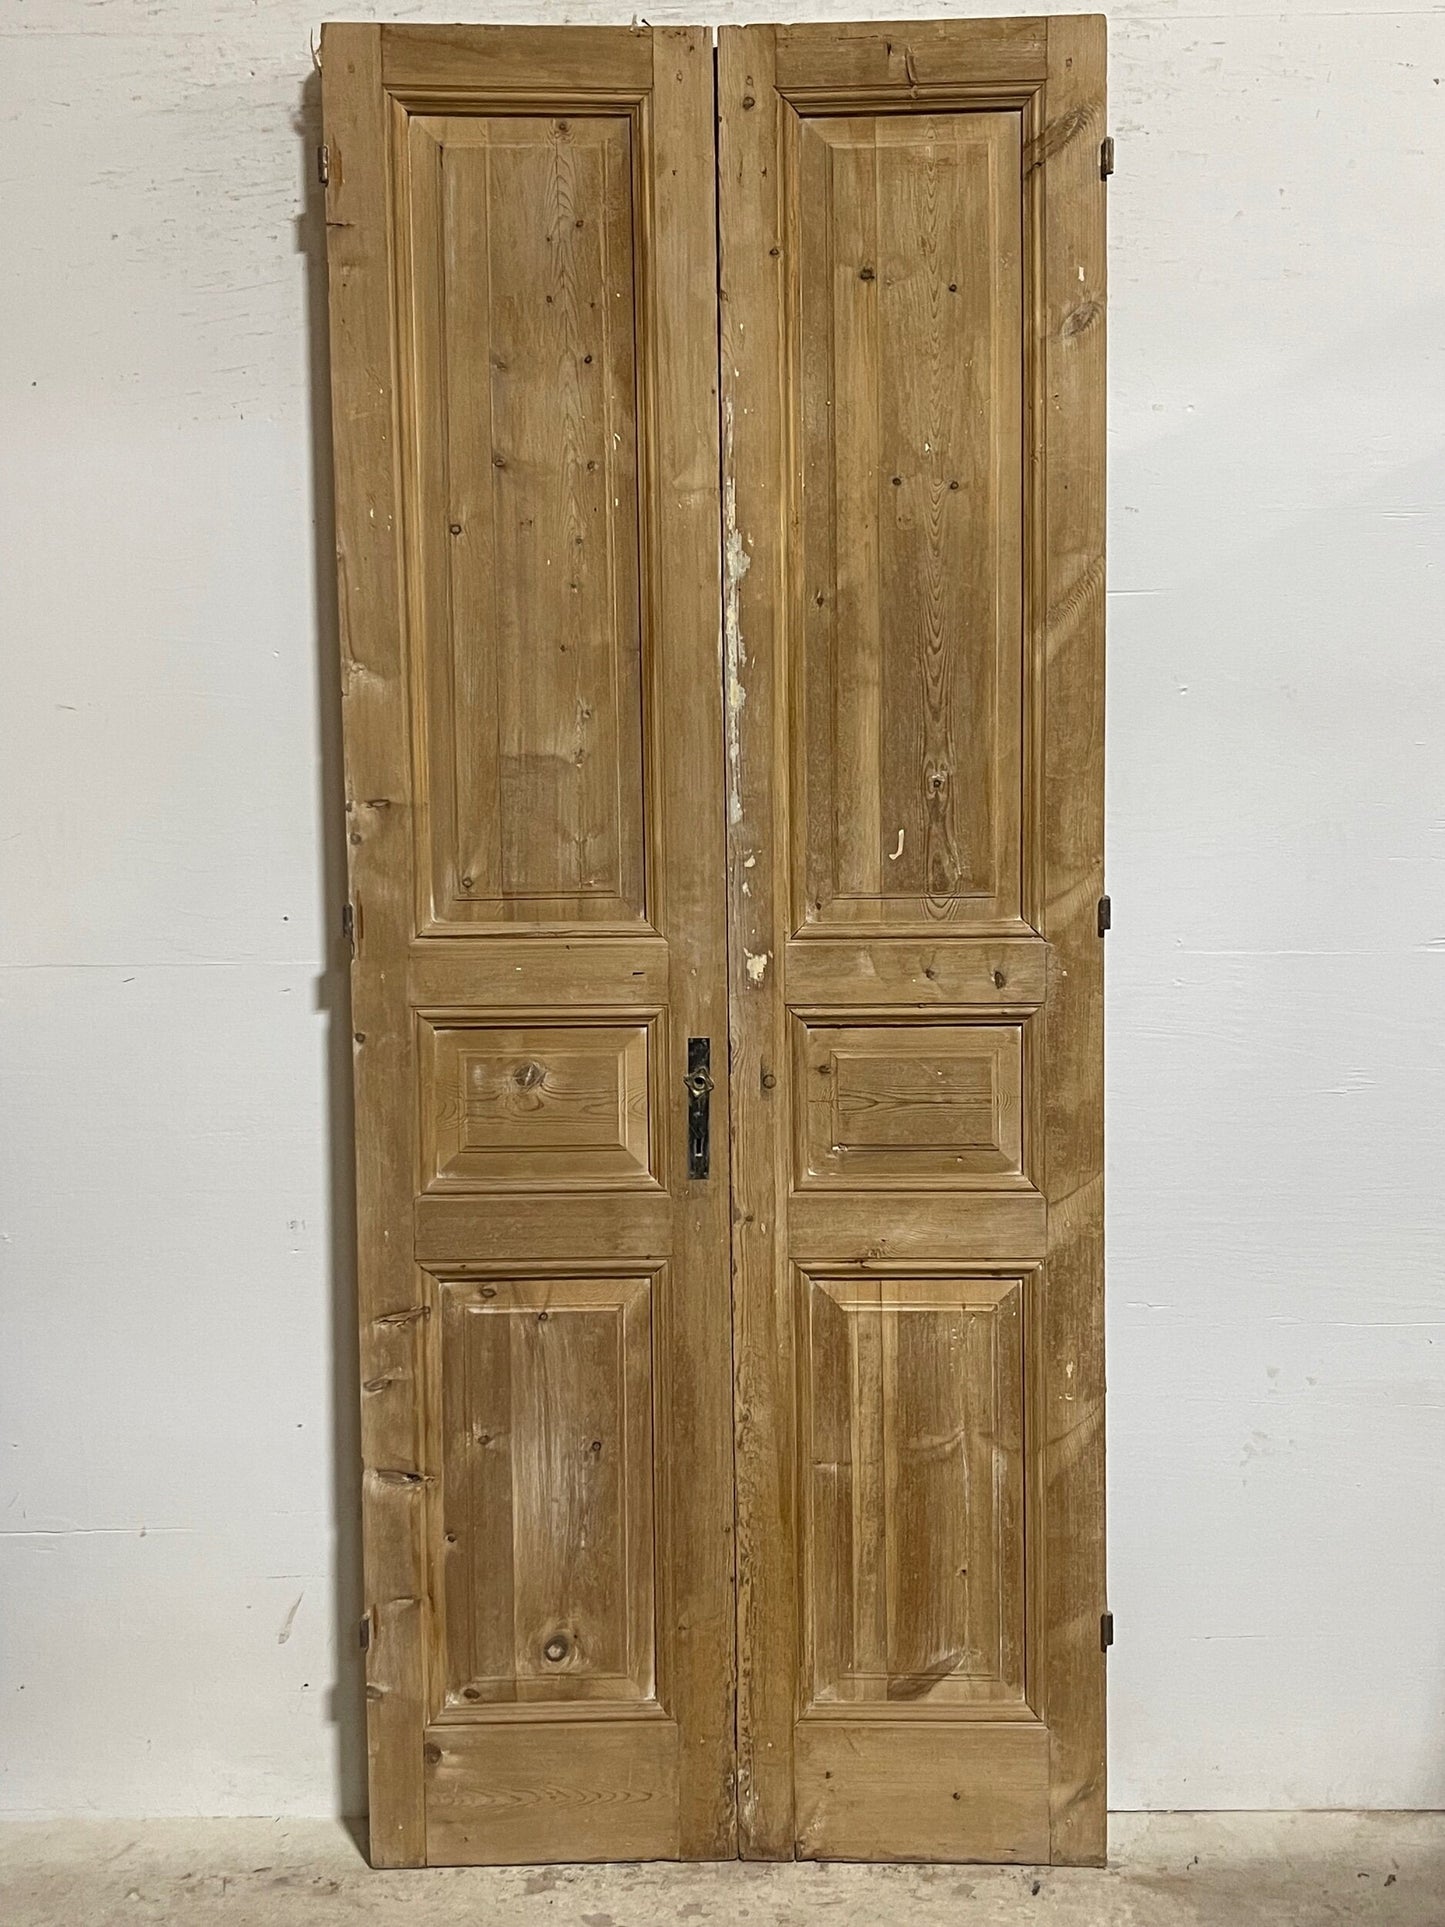 Antique French panel doors (95x39) I189